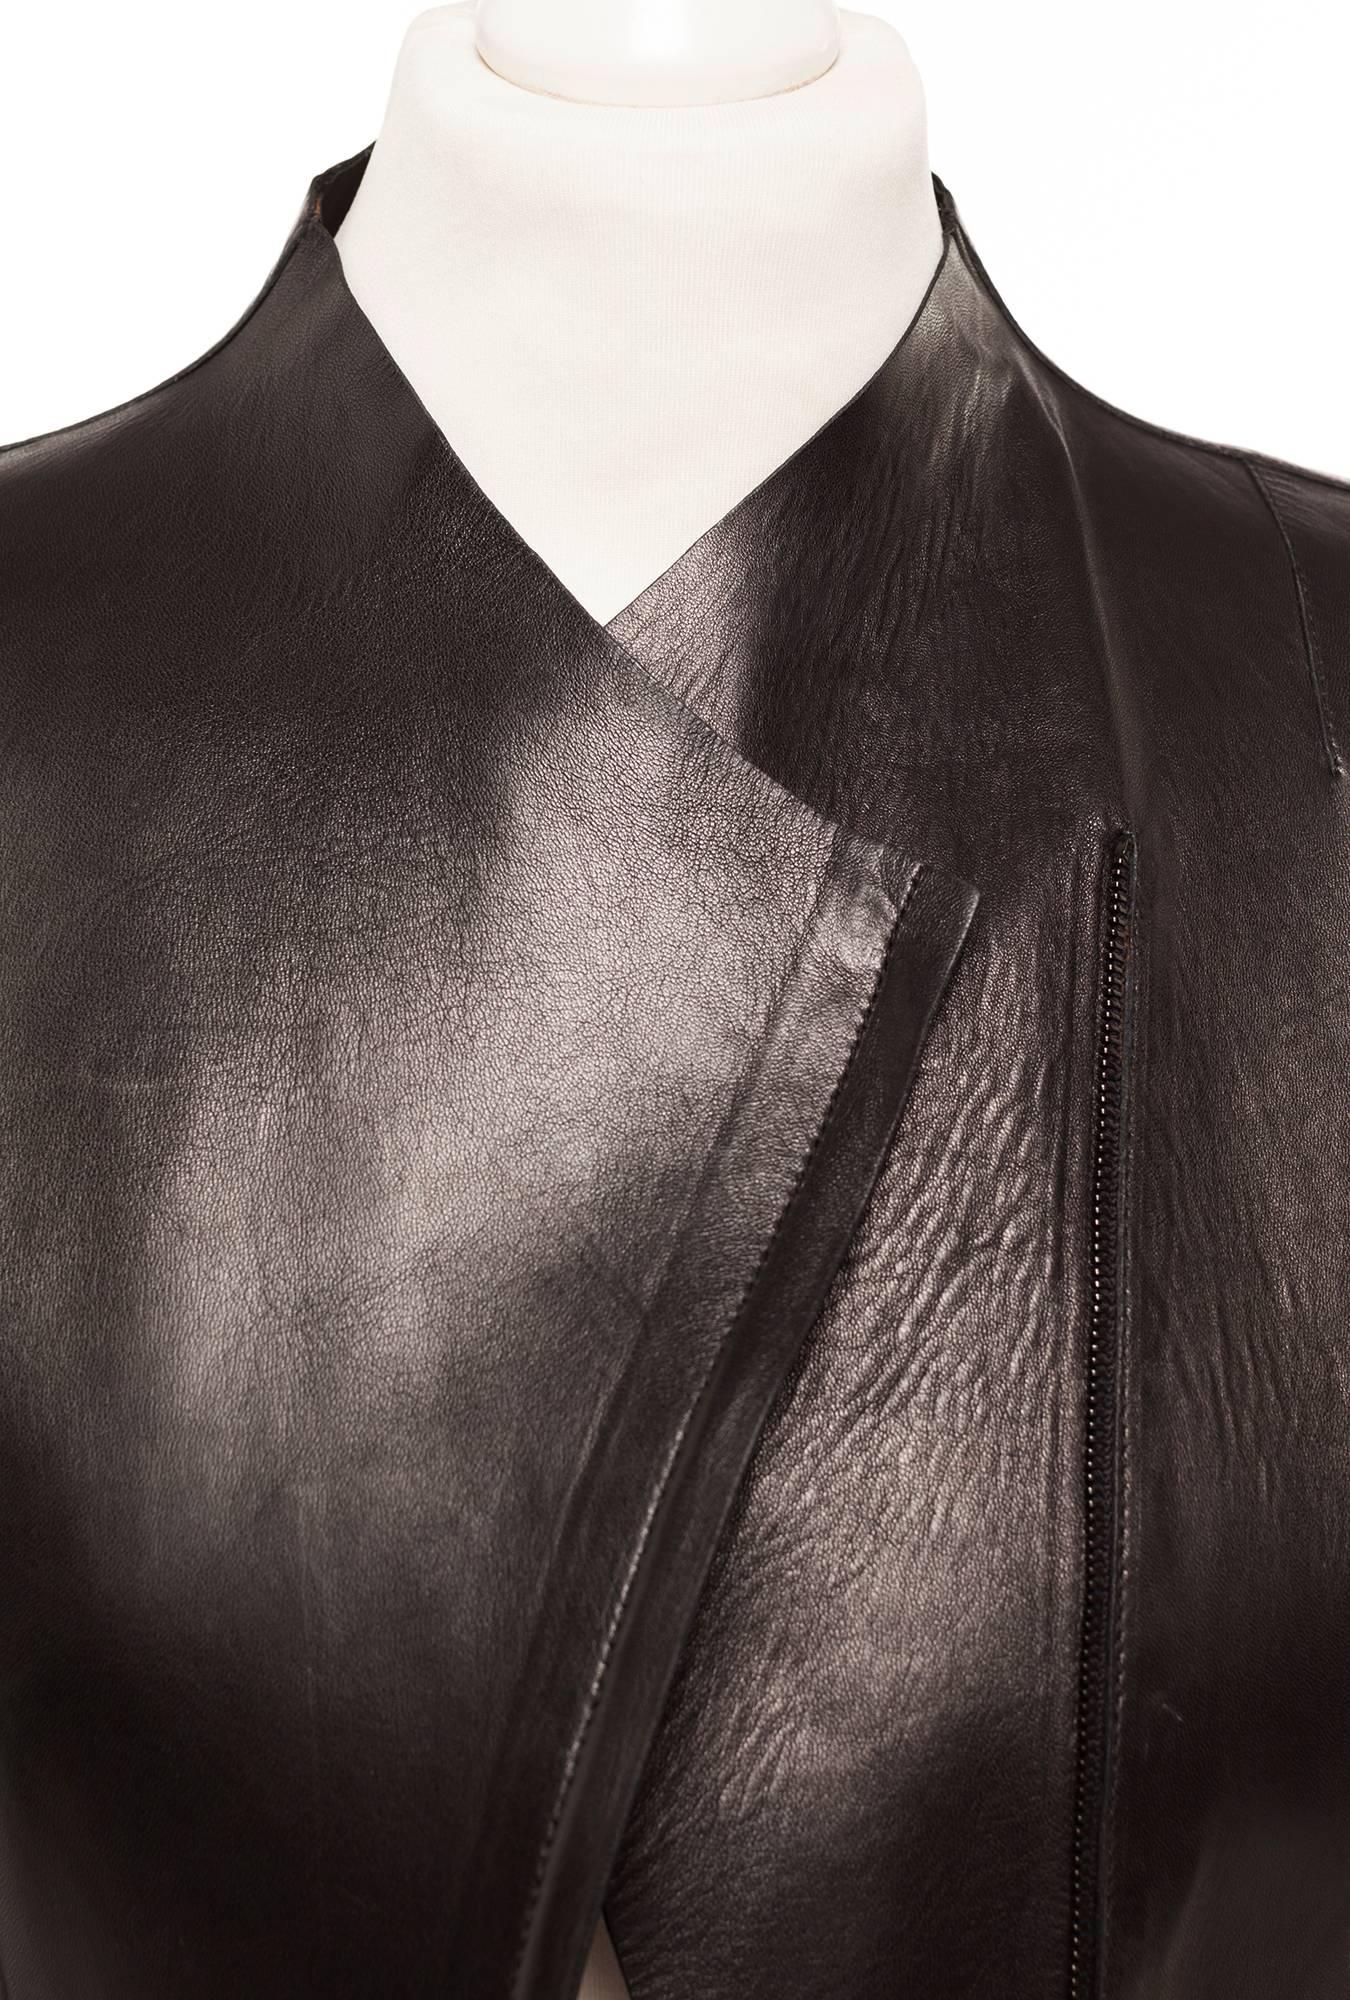 Mid 90s Gucci by Tom Ford asymmetrical Leather Blazer, Sz. M 4